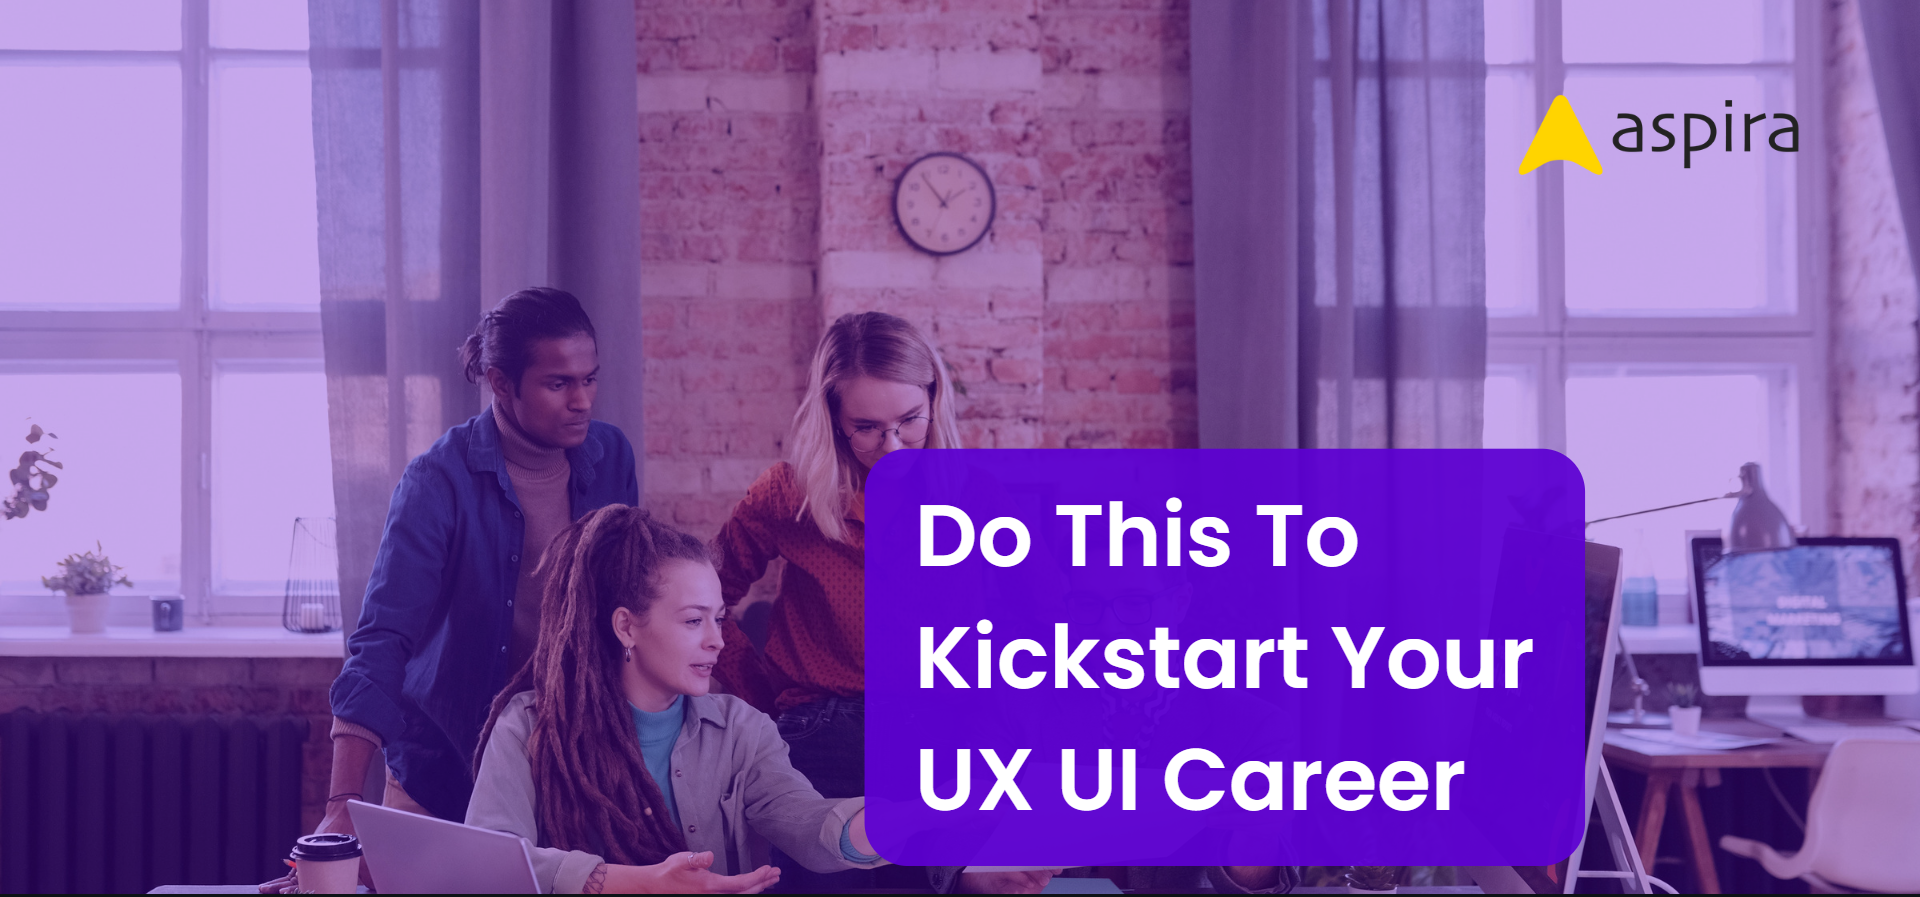 Do this to kickstart your UX UI career